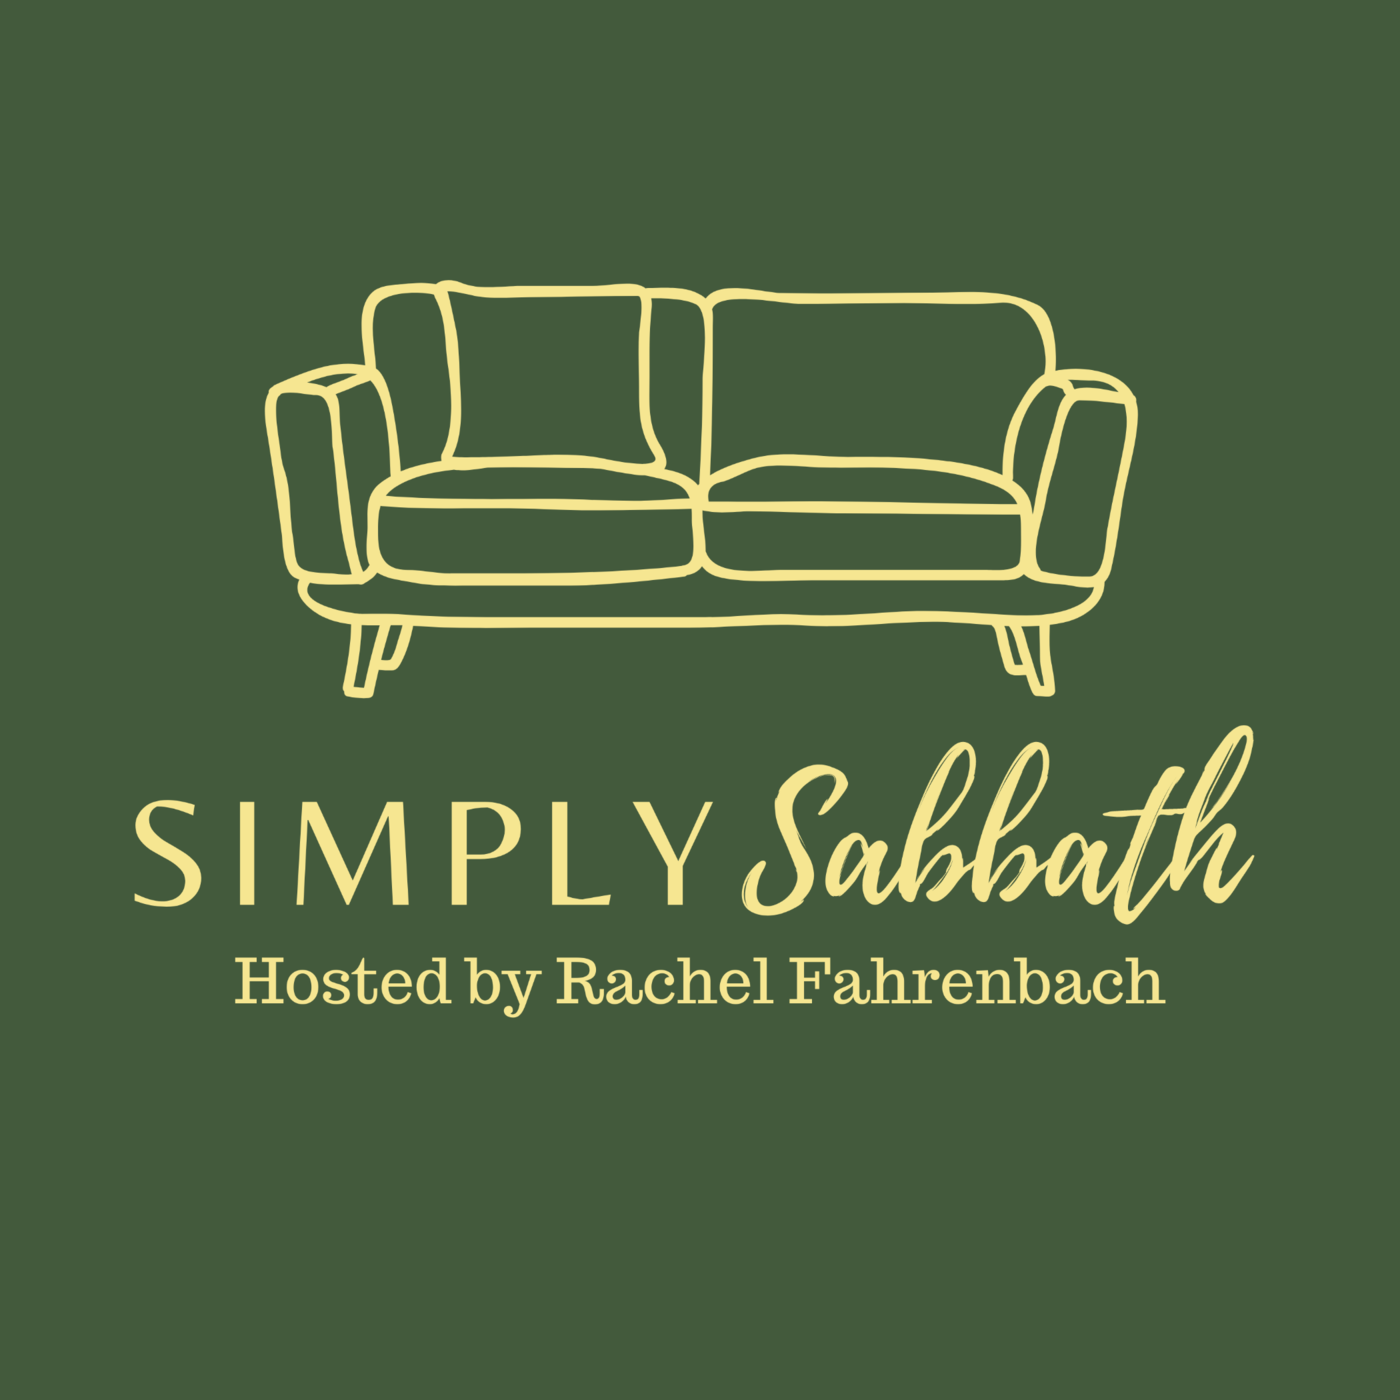 Ep 36: Should Christians Observe Sabbath? (pt 2)